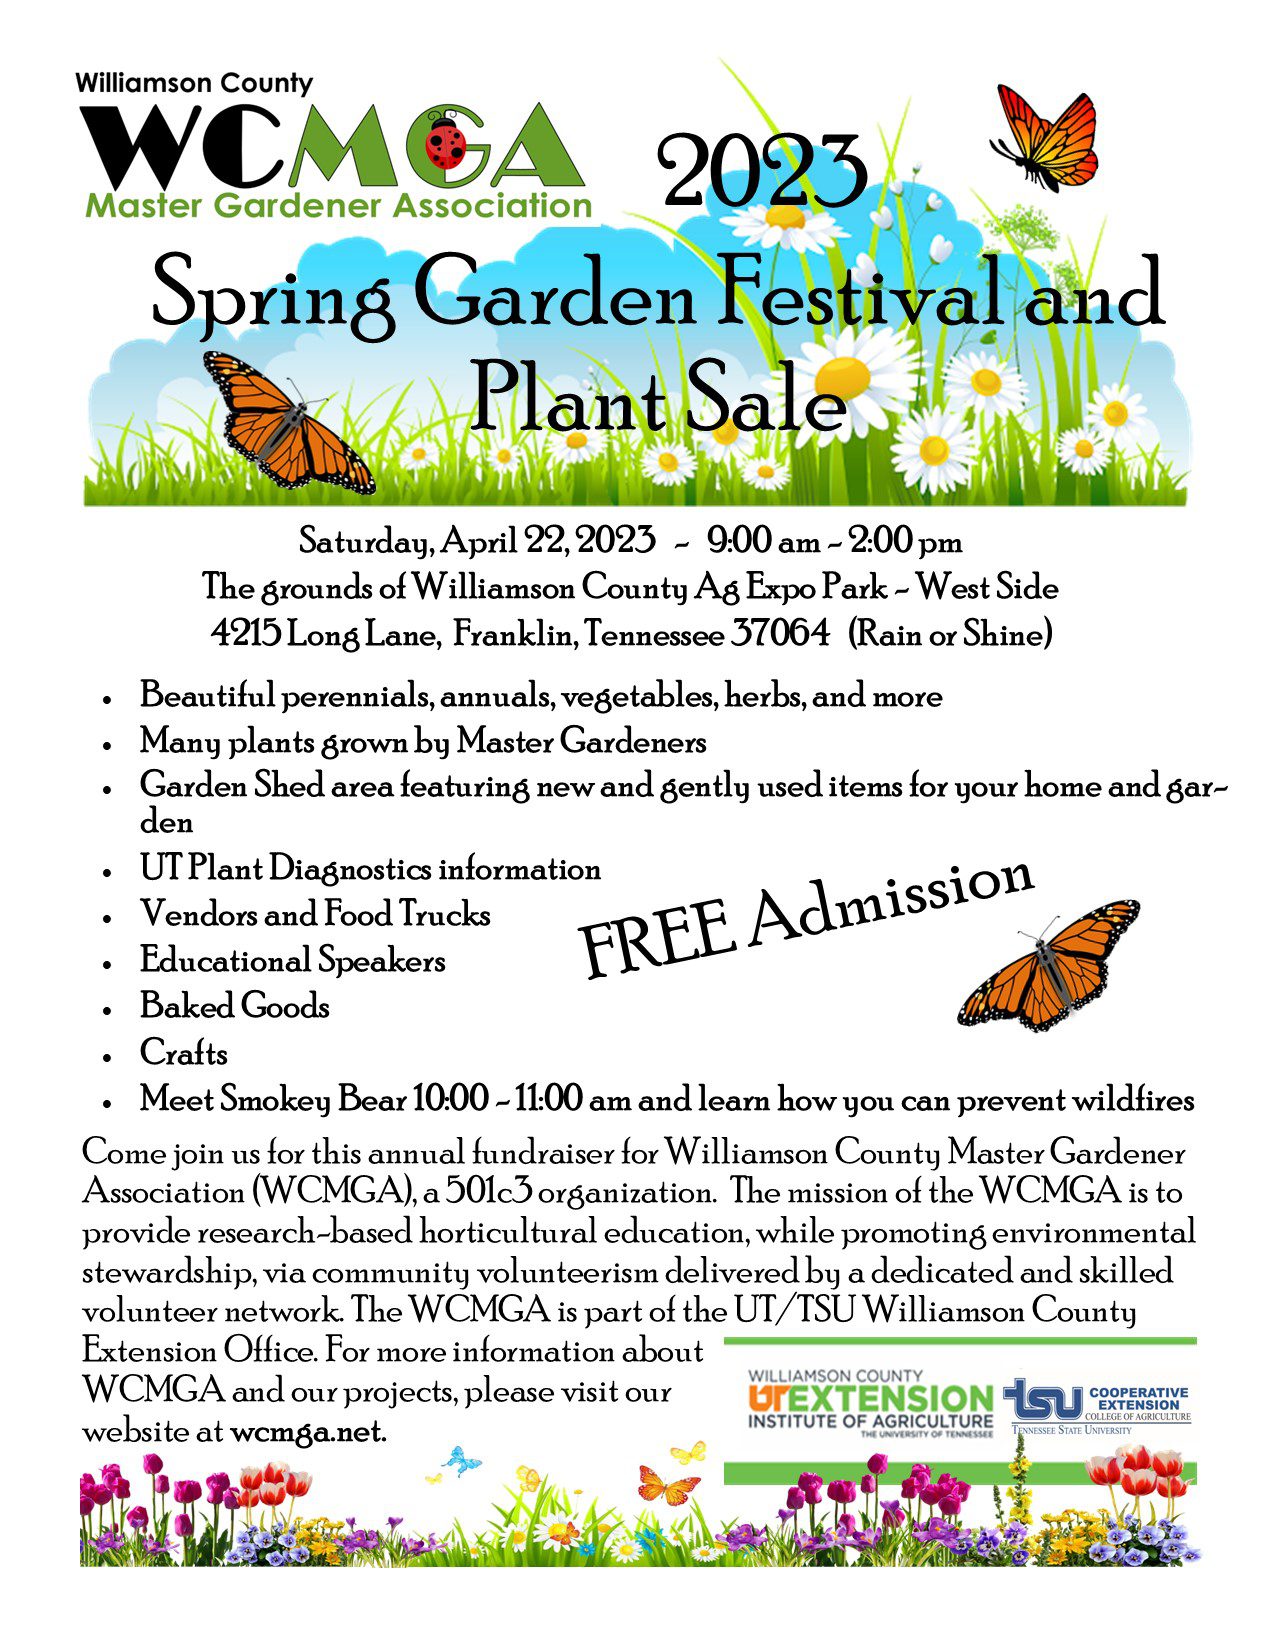 Williamson County Master Gardener Association Garden Festival and Plant Sale in Franklin, TN.